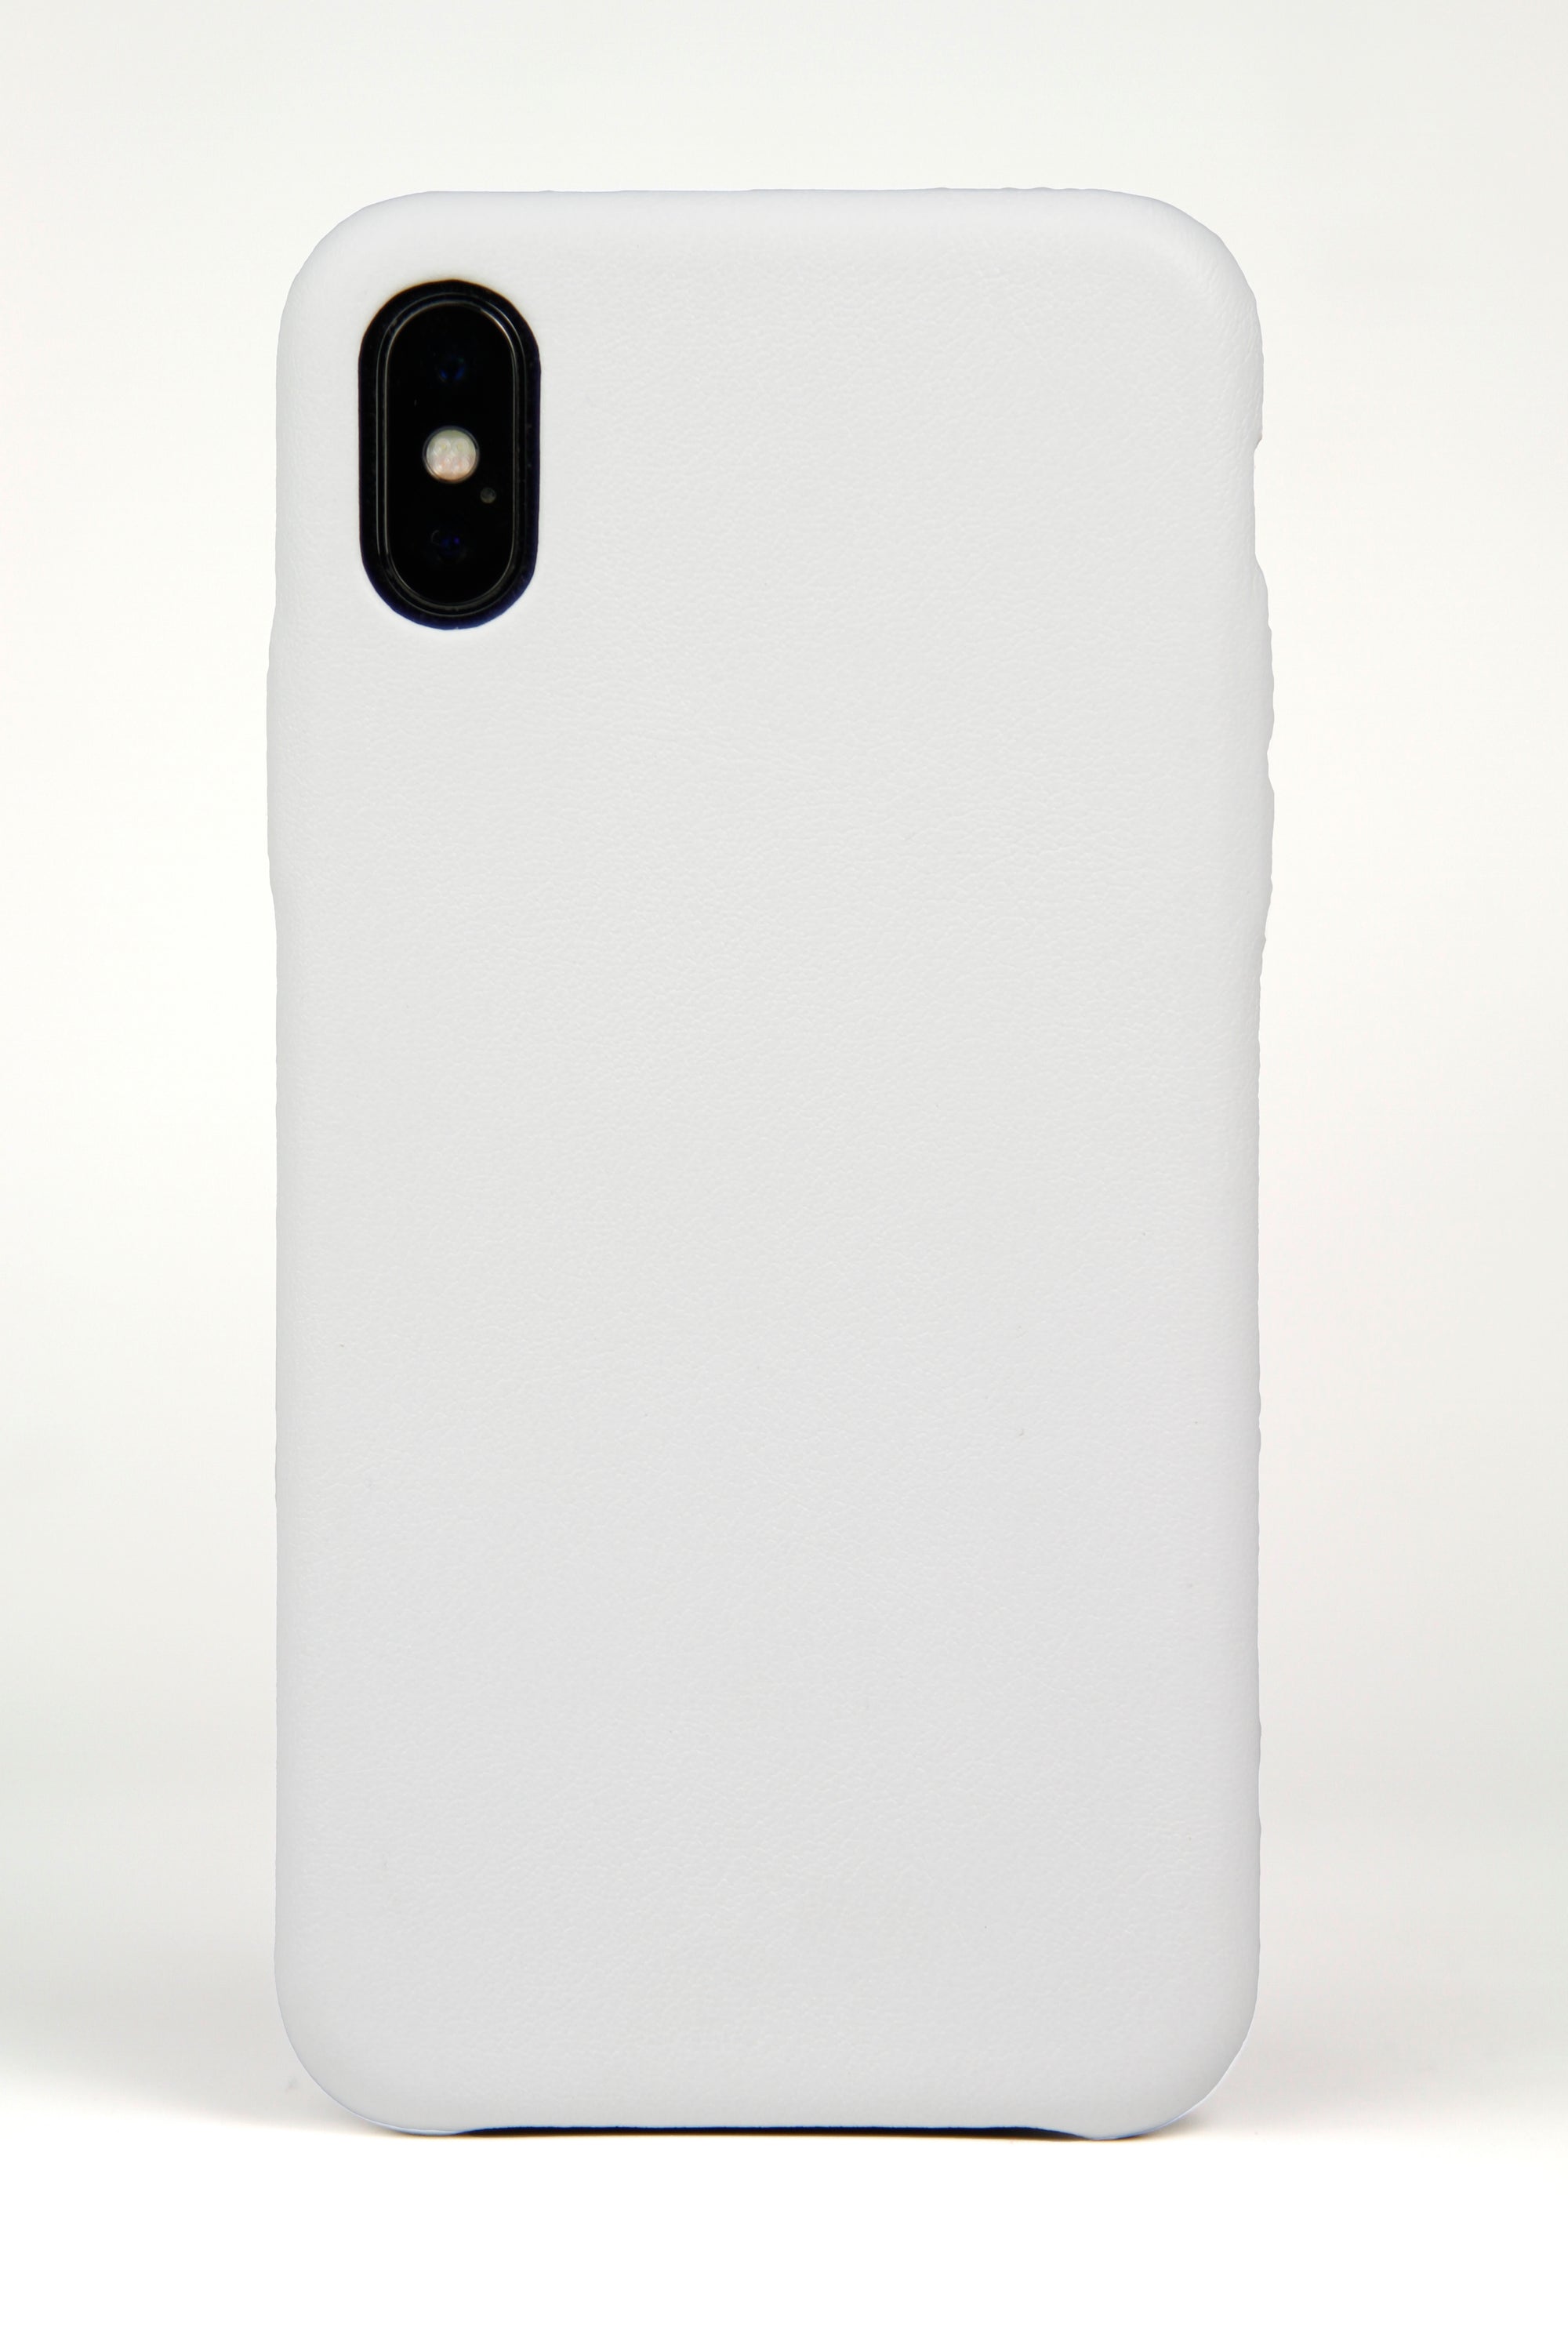 iPhone X Hülle, weißes Leder